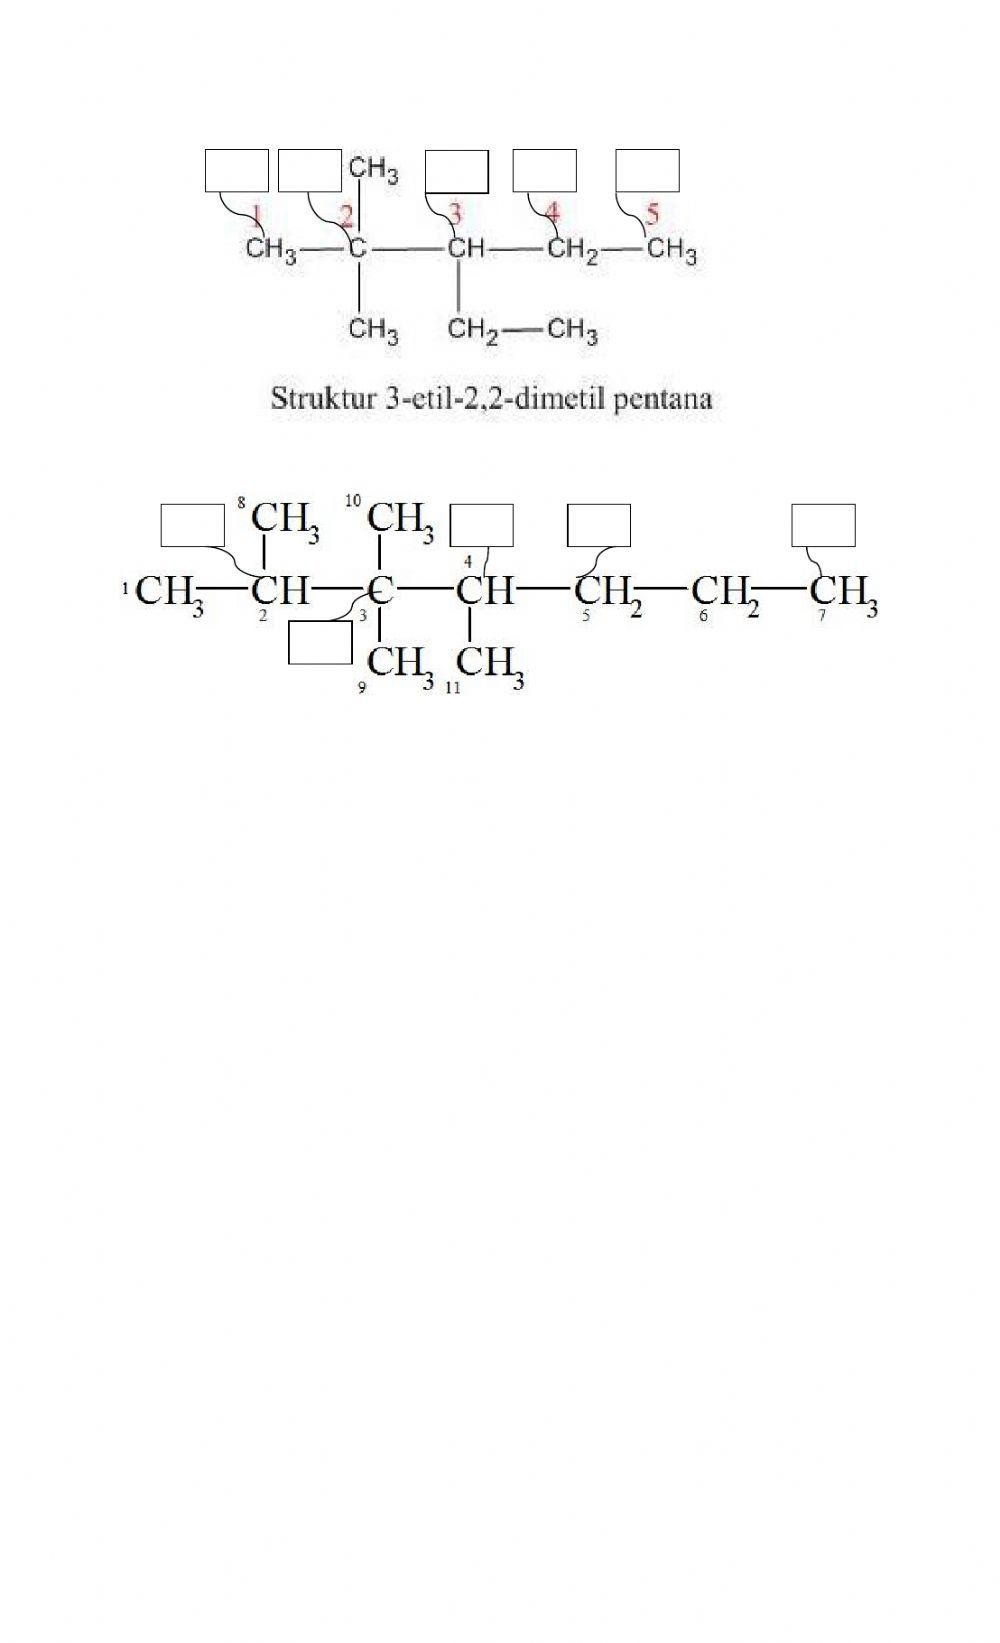 Quiz-1 atom karbon primer, sekunder, tersier, kuarterner